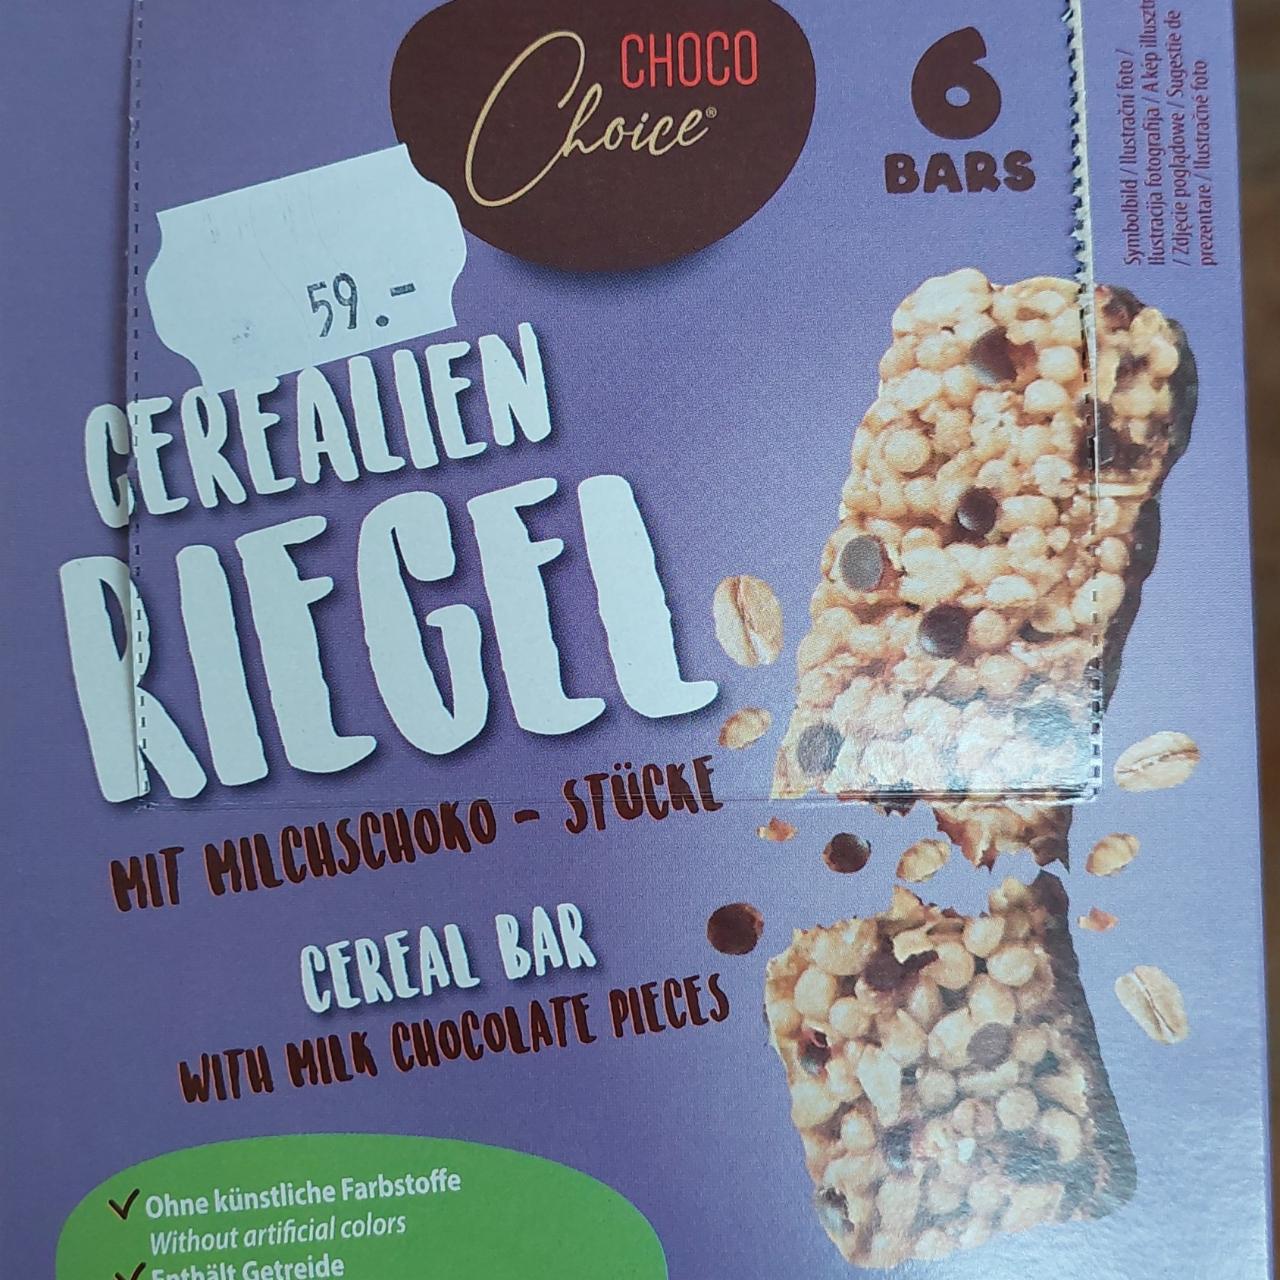 Képek - Cereal bar with milk chocolate pieces Choco choice